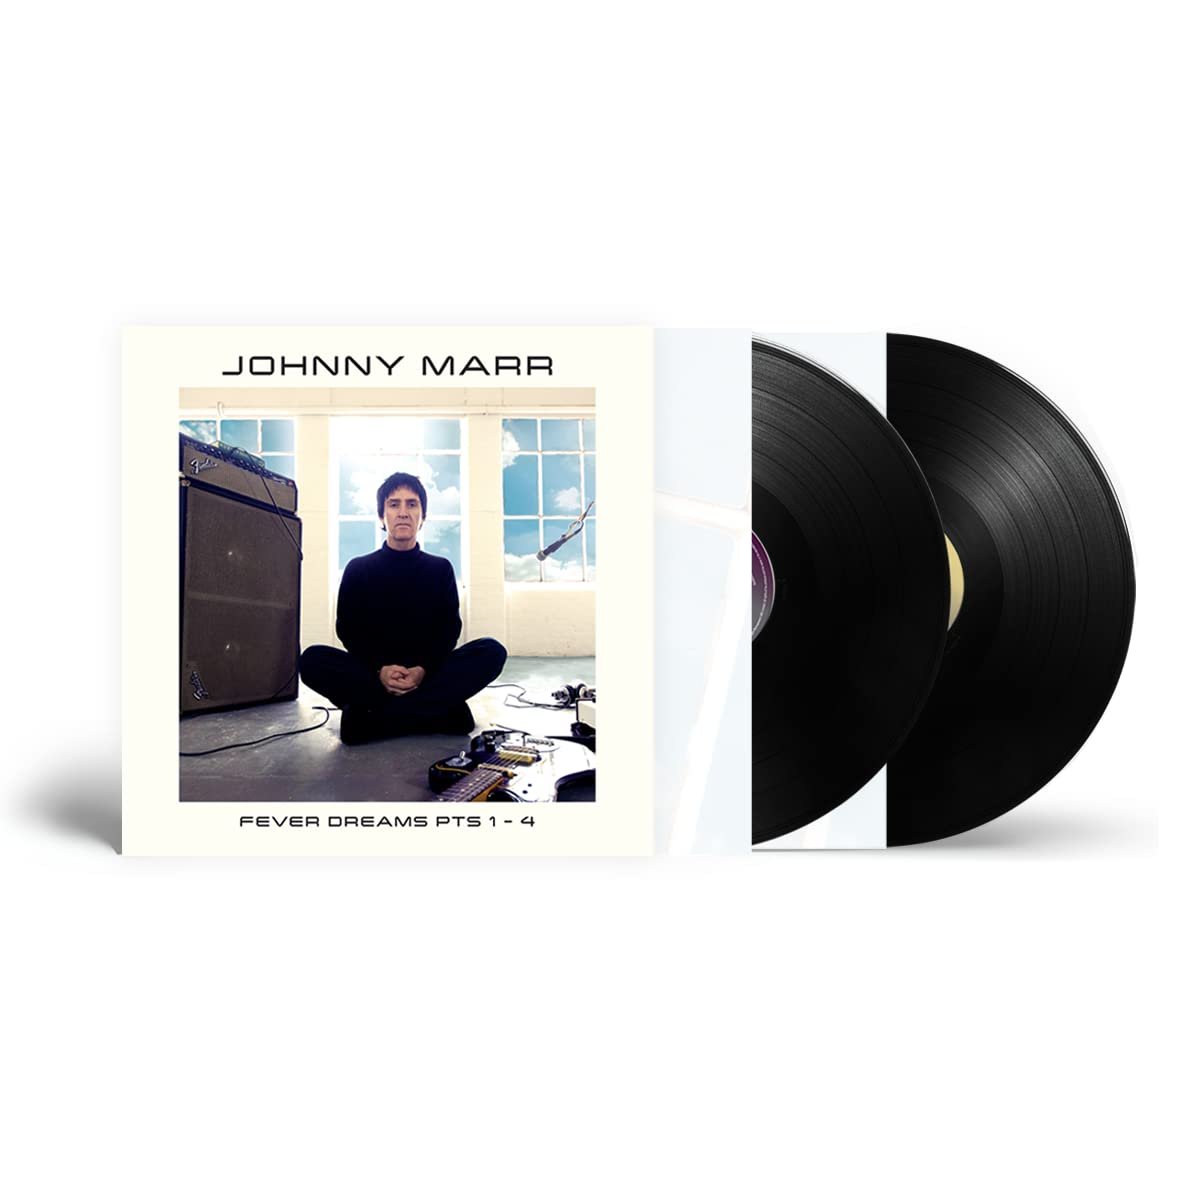 Johnny Marr - Fever Dreams Pts 1-4 $14.10
amzn.to/3QgcIKV

#vinylcommunity #vinyl